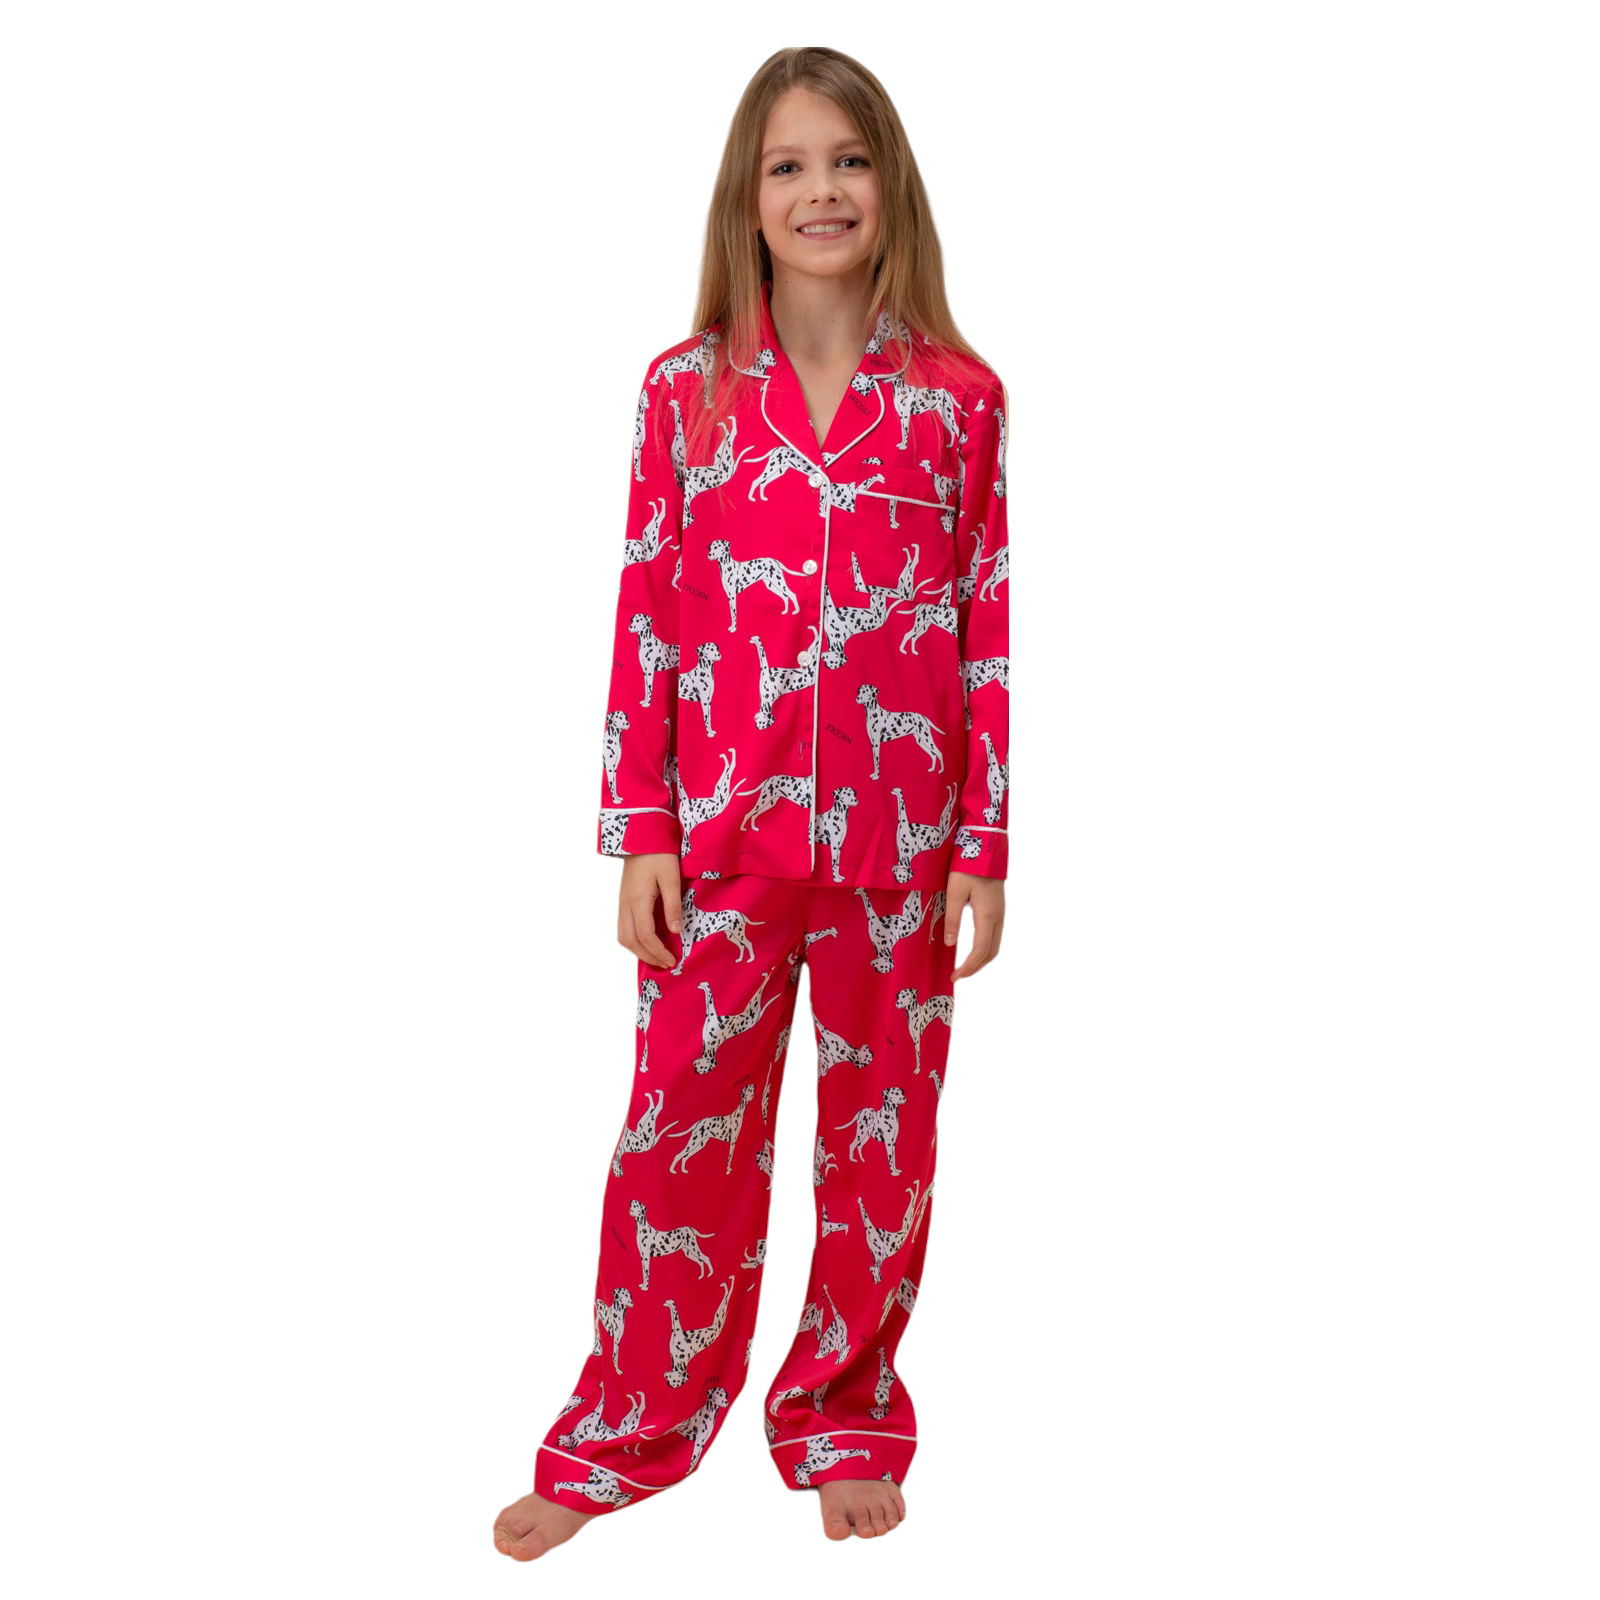 Пижама детская Nicole Home Барби цветная размер 110 P7Z20P110dog